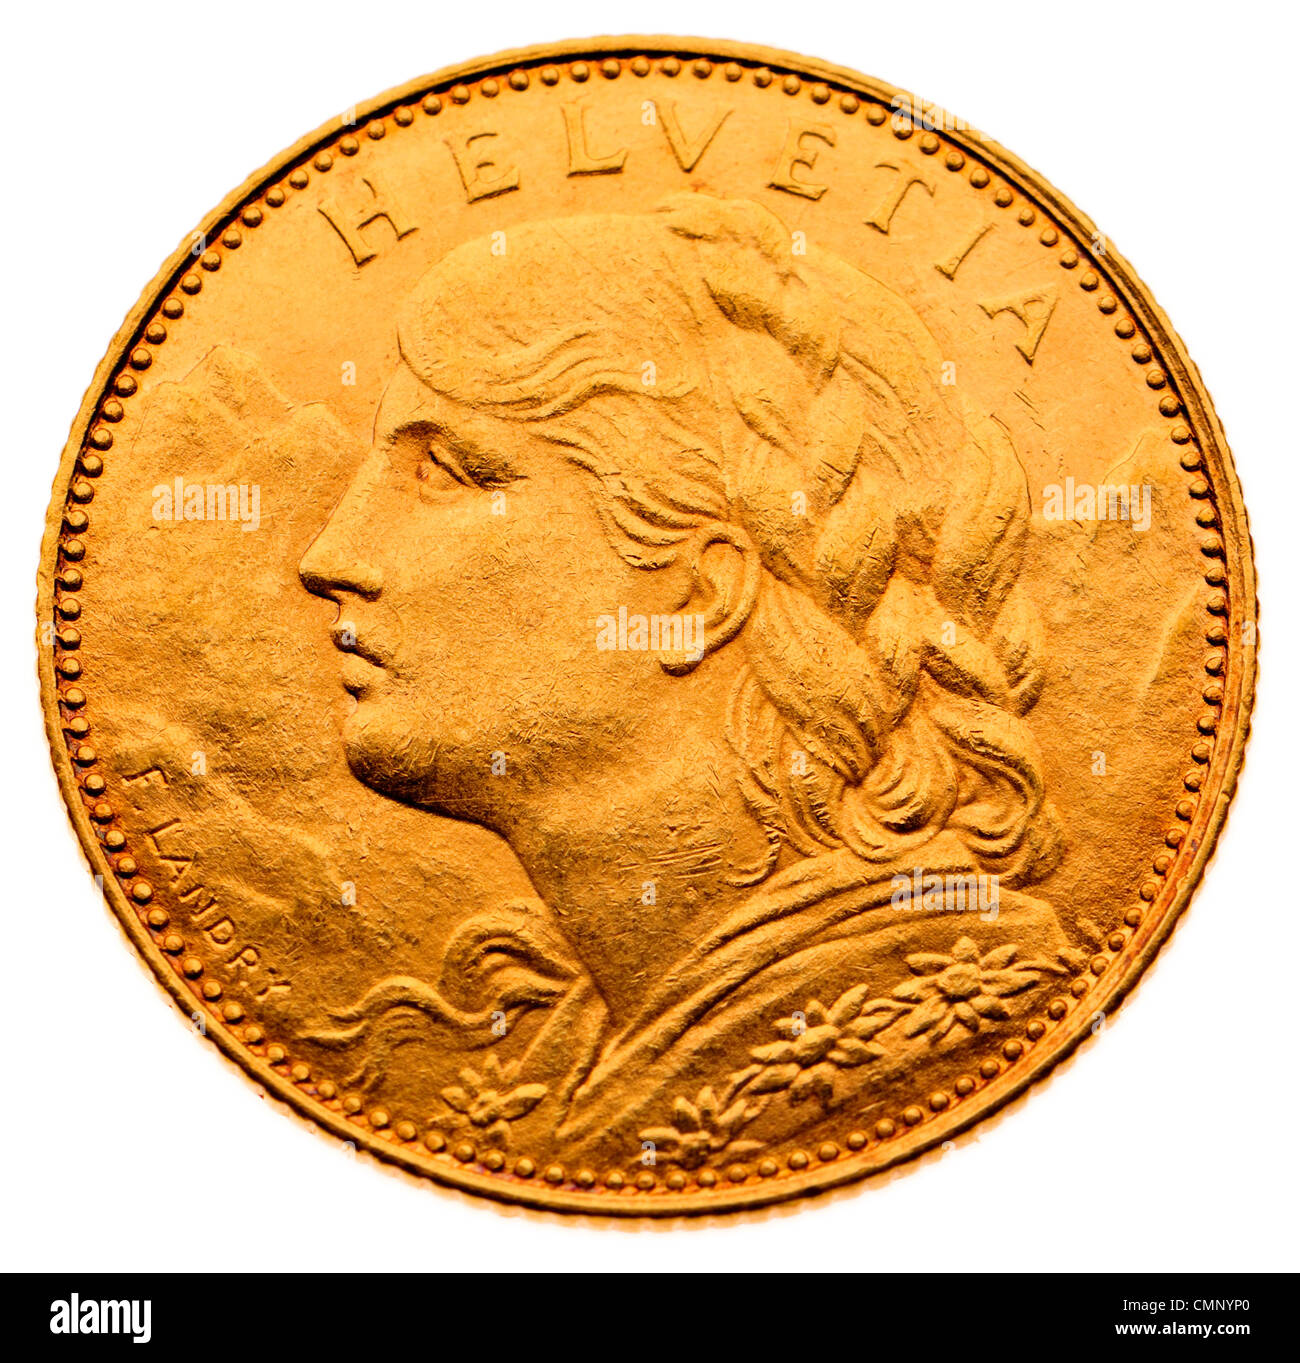 Moneta in oro - Swiss 10 franchi, 1914 Foto Stock